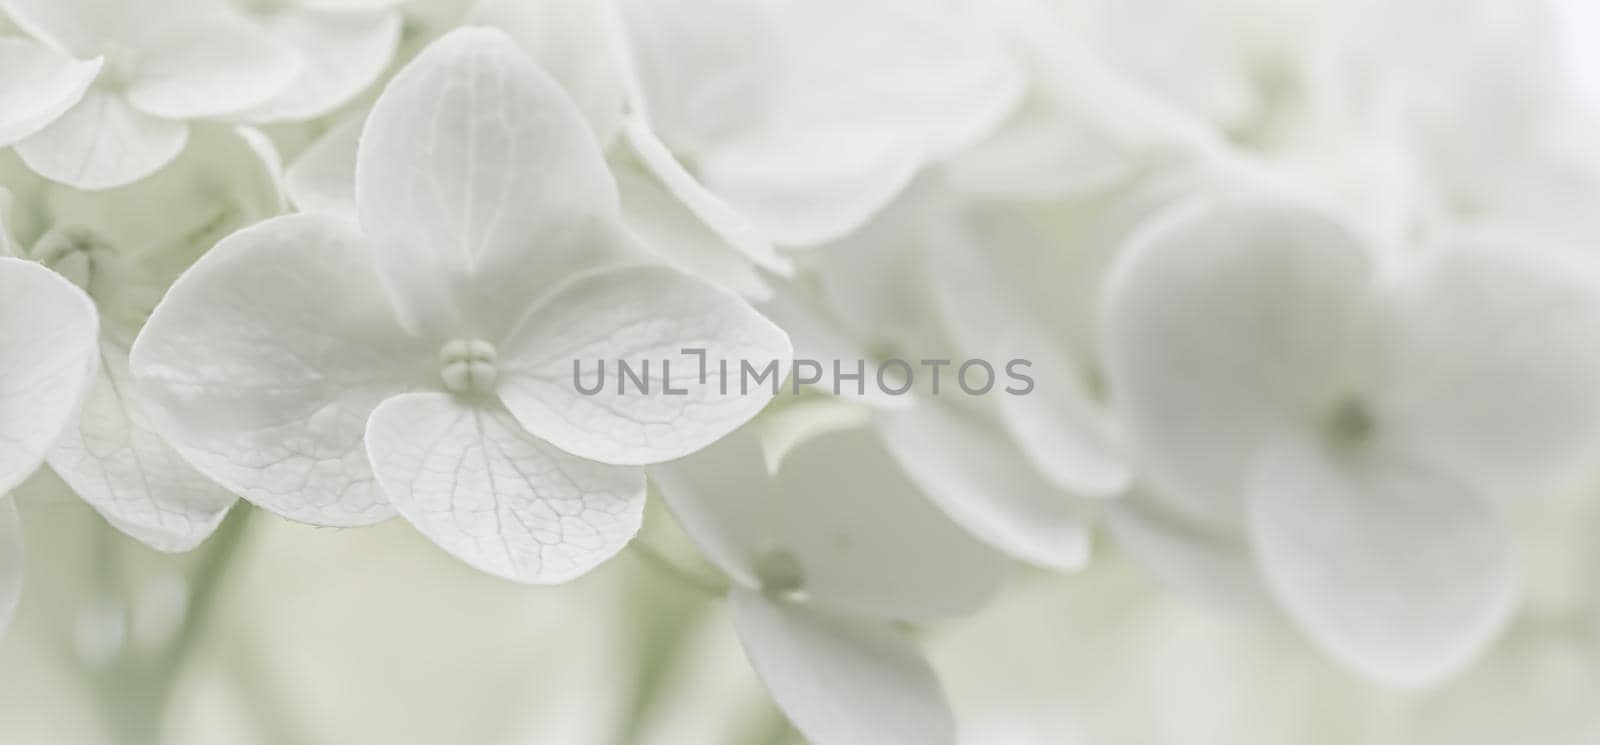 Background from white Hydrangea flowers. Hortensia in bloom.